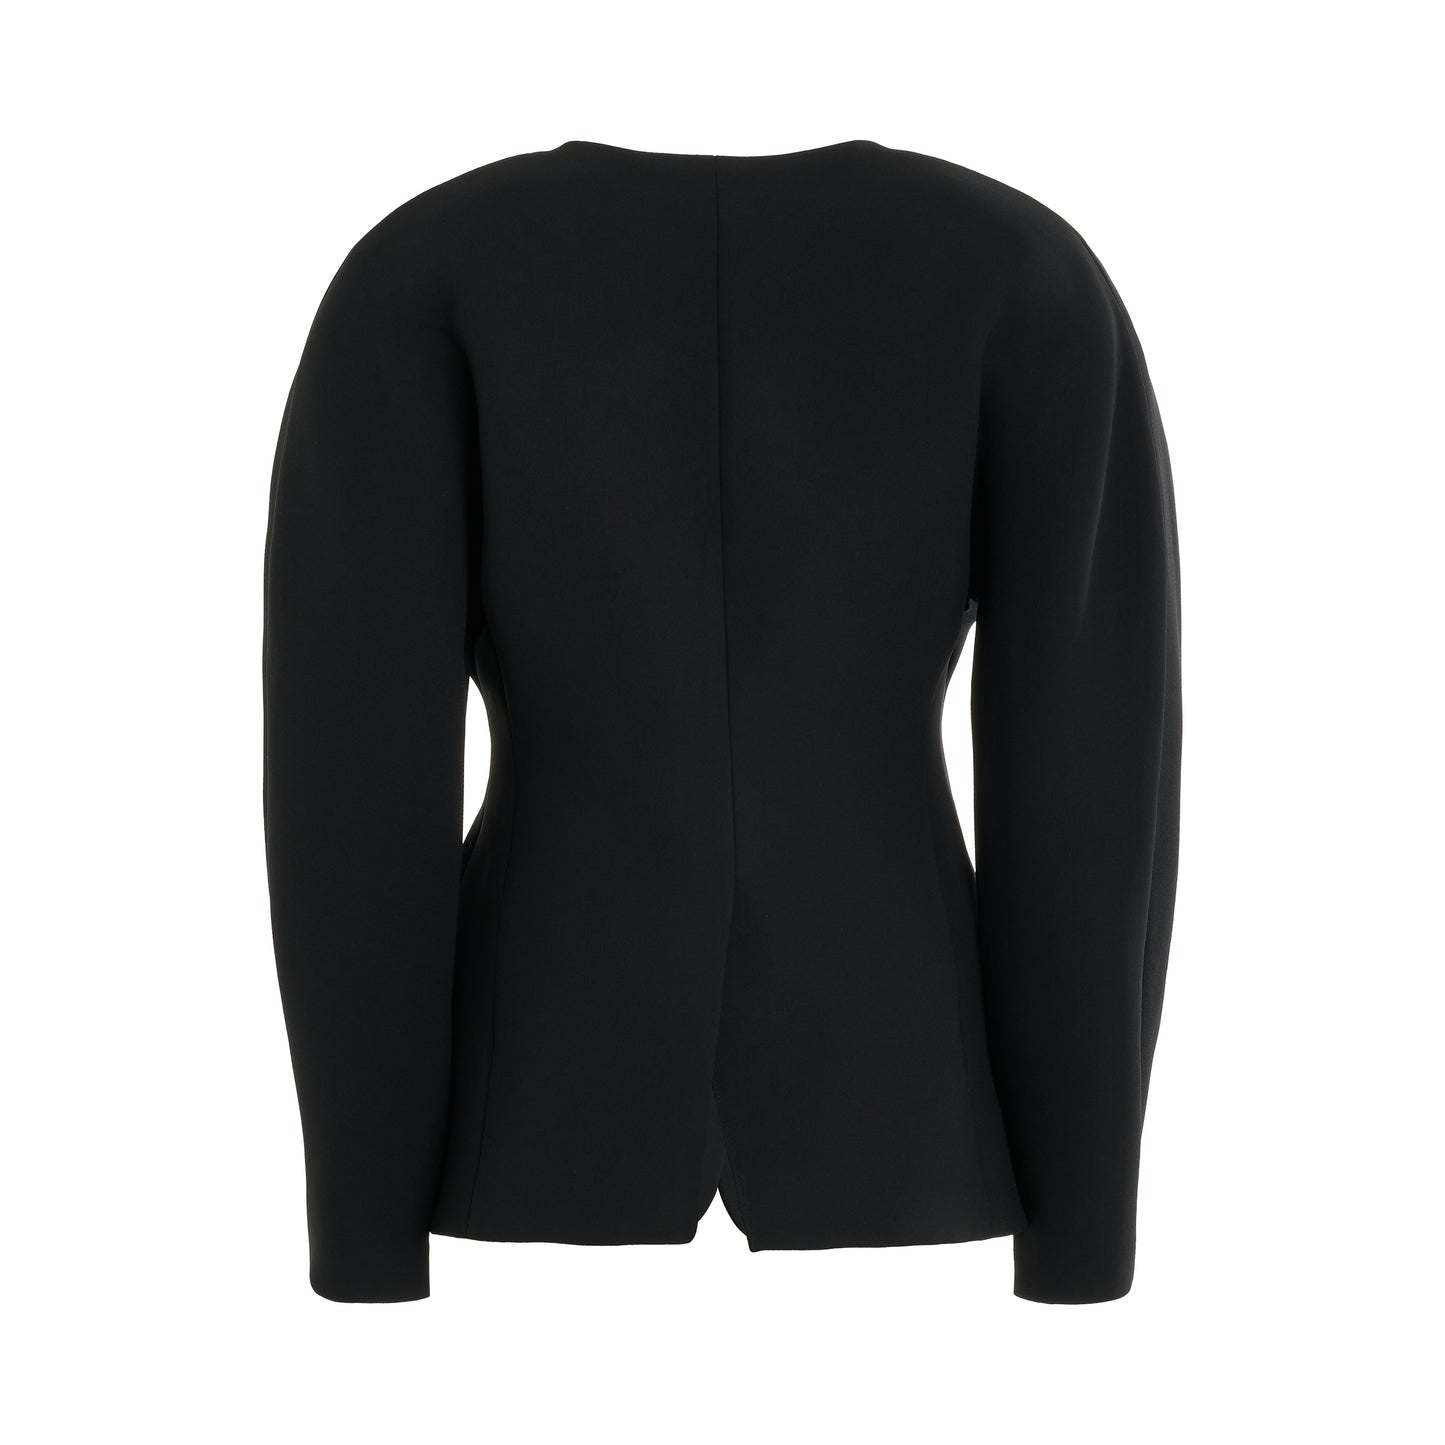 Ovalo Suit Jacket in Black